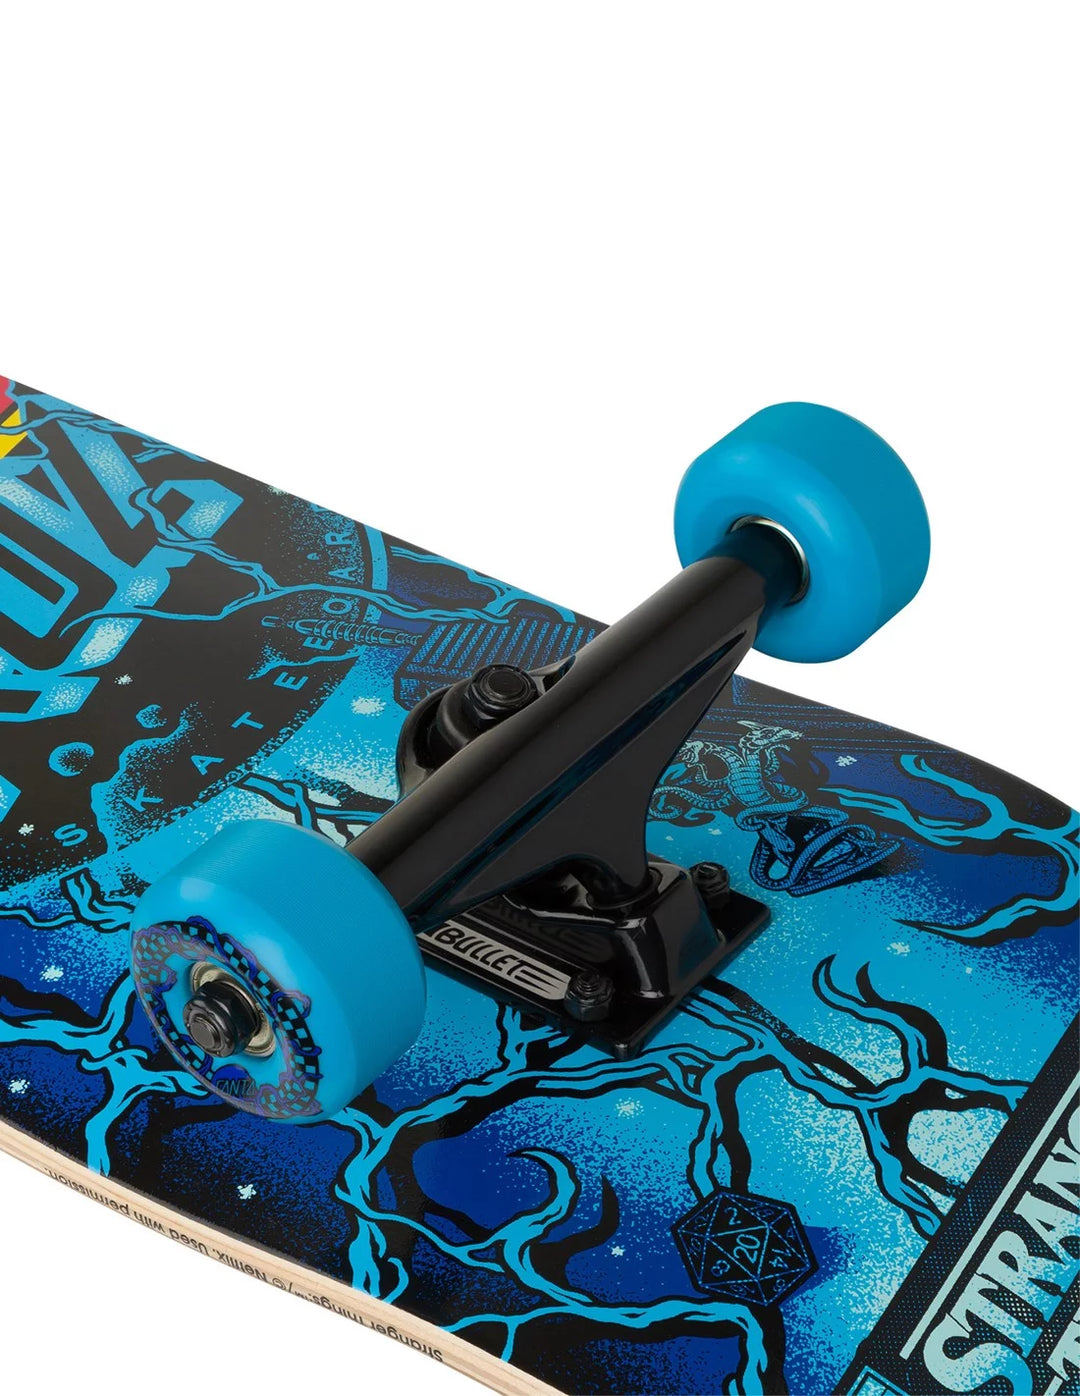 SANTA CRUZ x STRANGER THINGS Punto classico 8,25" - Skateboard completo